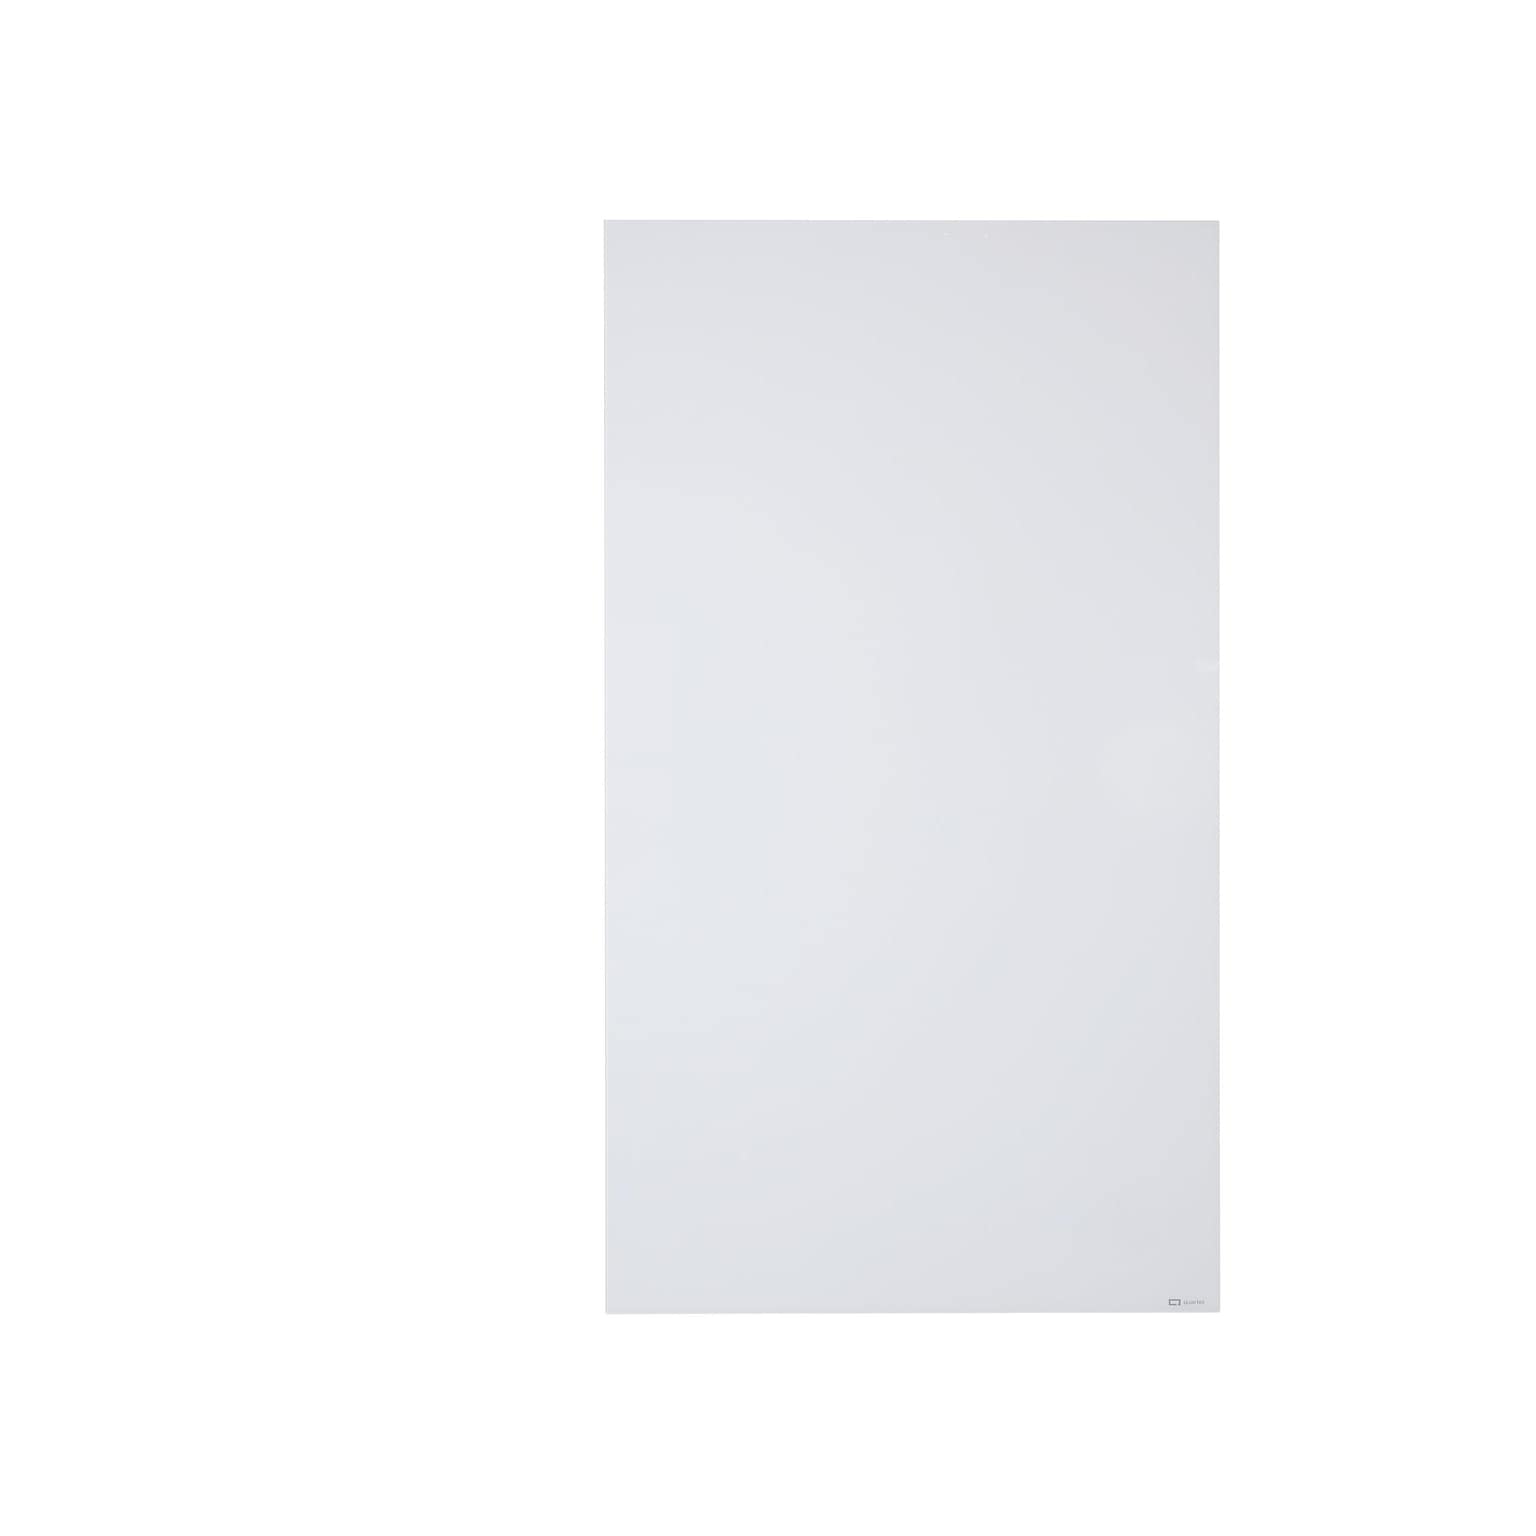 Quartet InvisaMount Magnetic Glass Dry-Erase Whiteboard, 7 x 4 (Q014885IMW1)